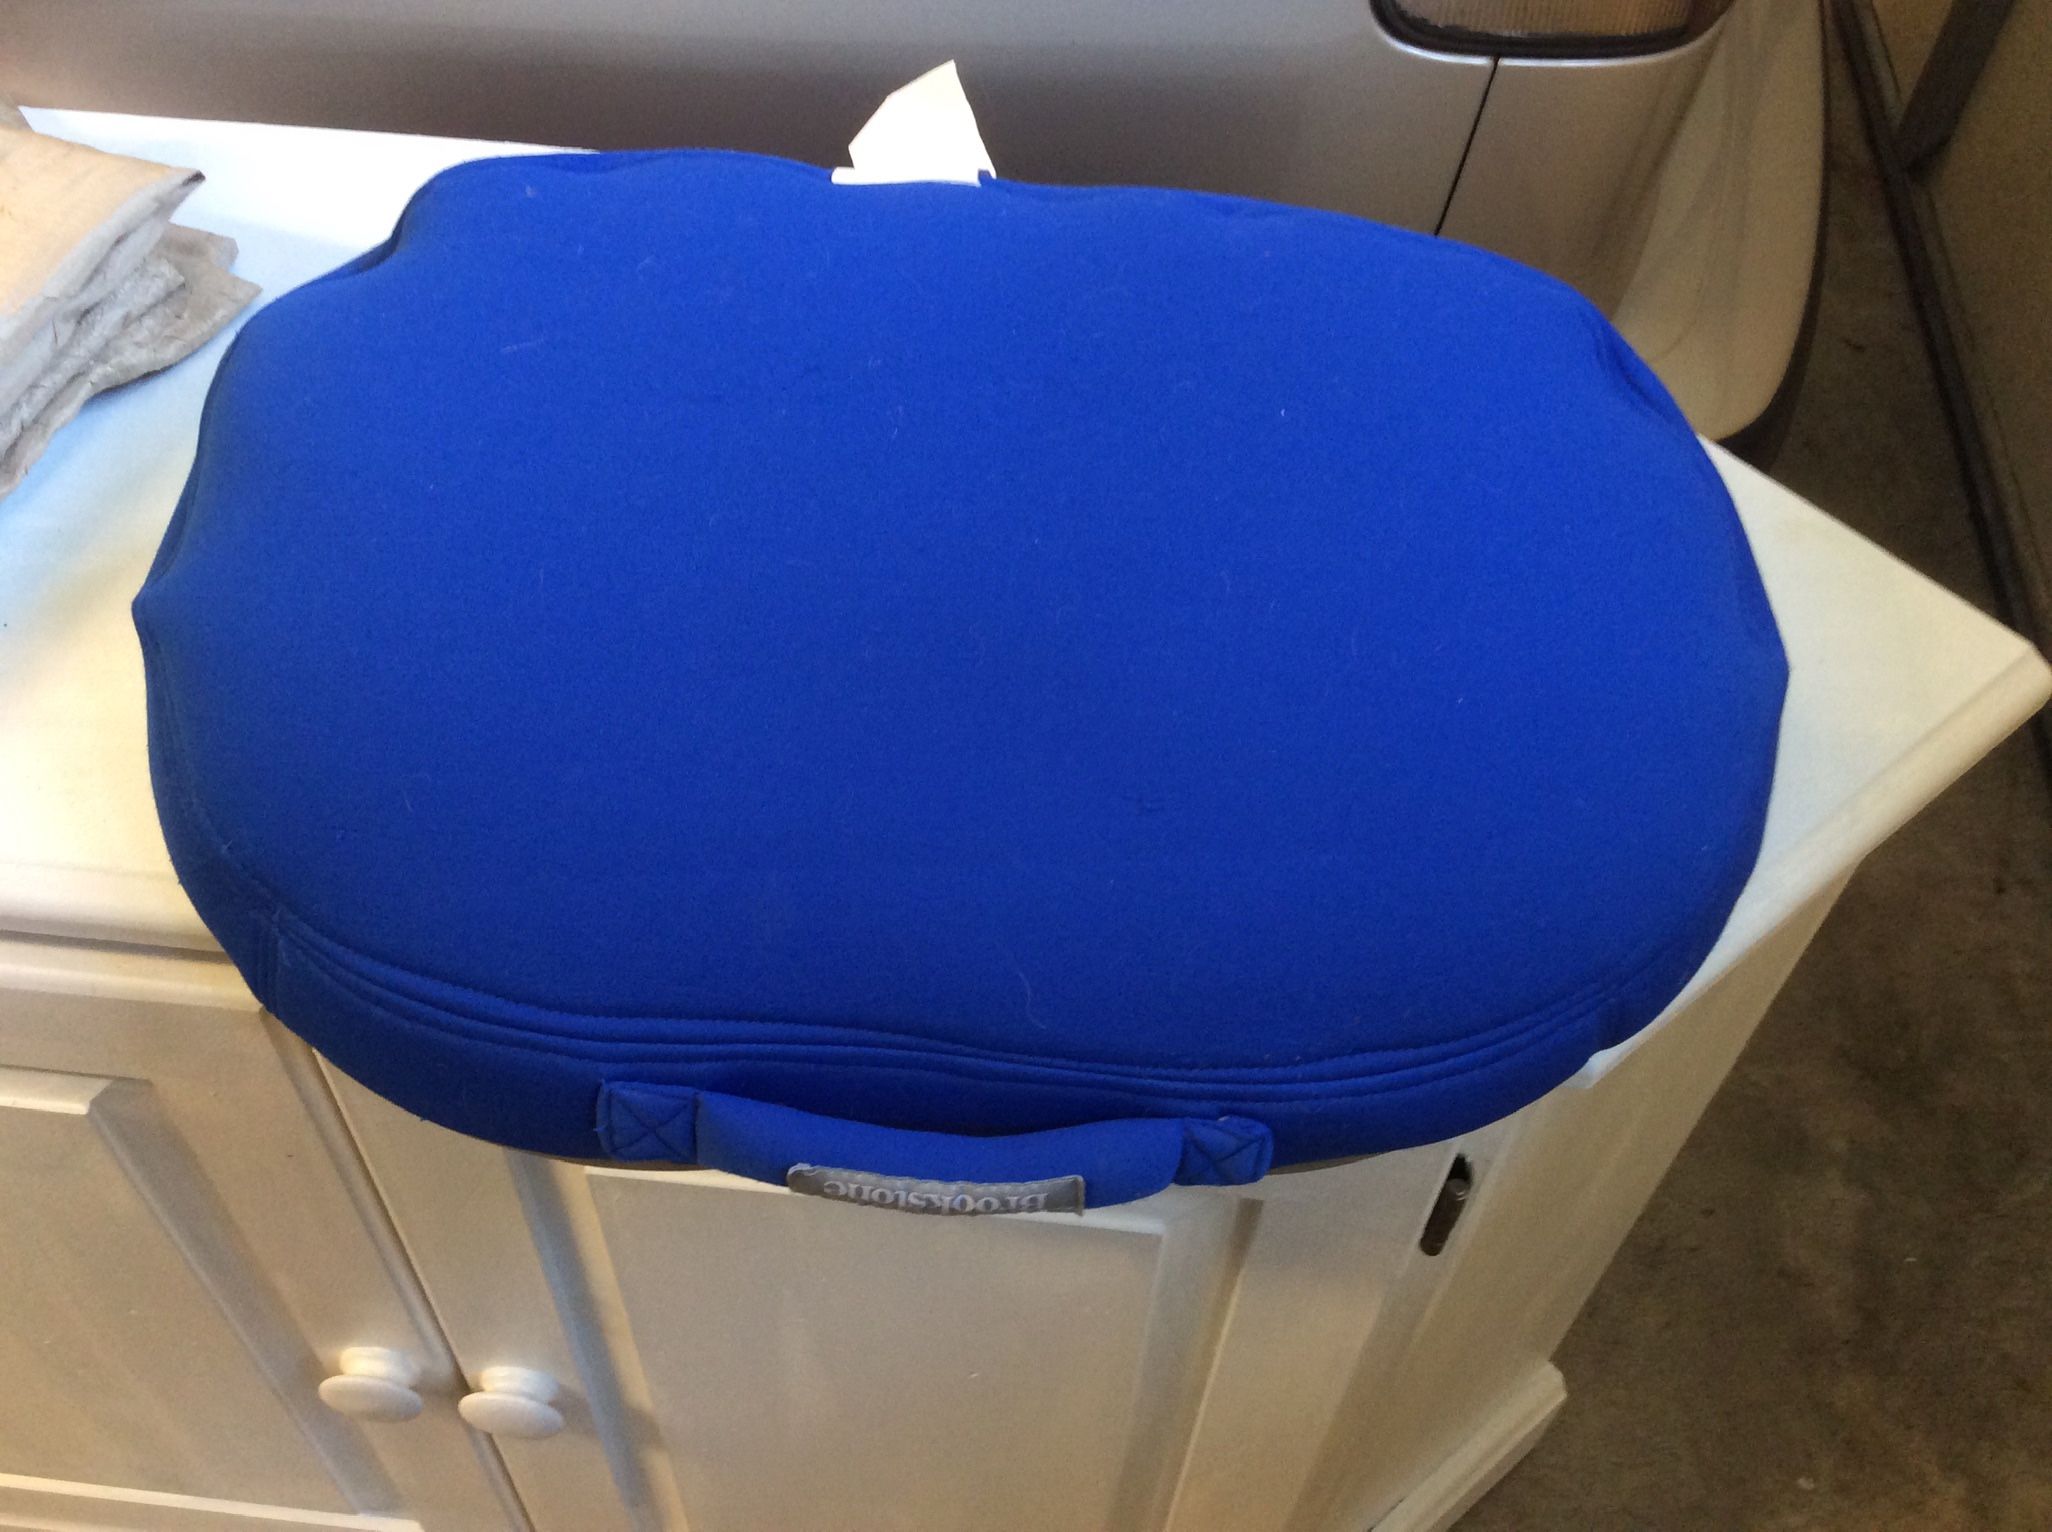 Speaker Laptop Cushions : brookstone laptop desks